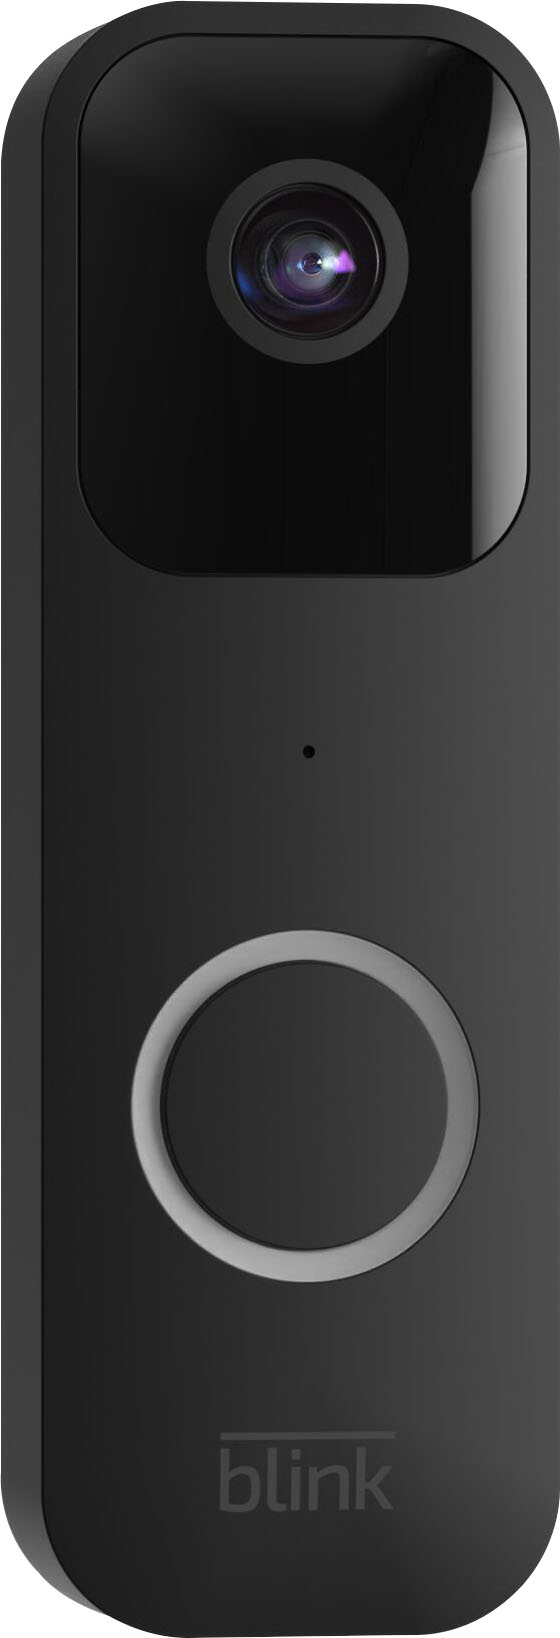 Angle View: Ring - Wired Doorbell Pro Smart WiFi Video Doorbell - Satin Nickel